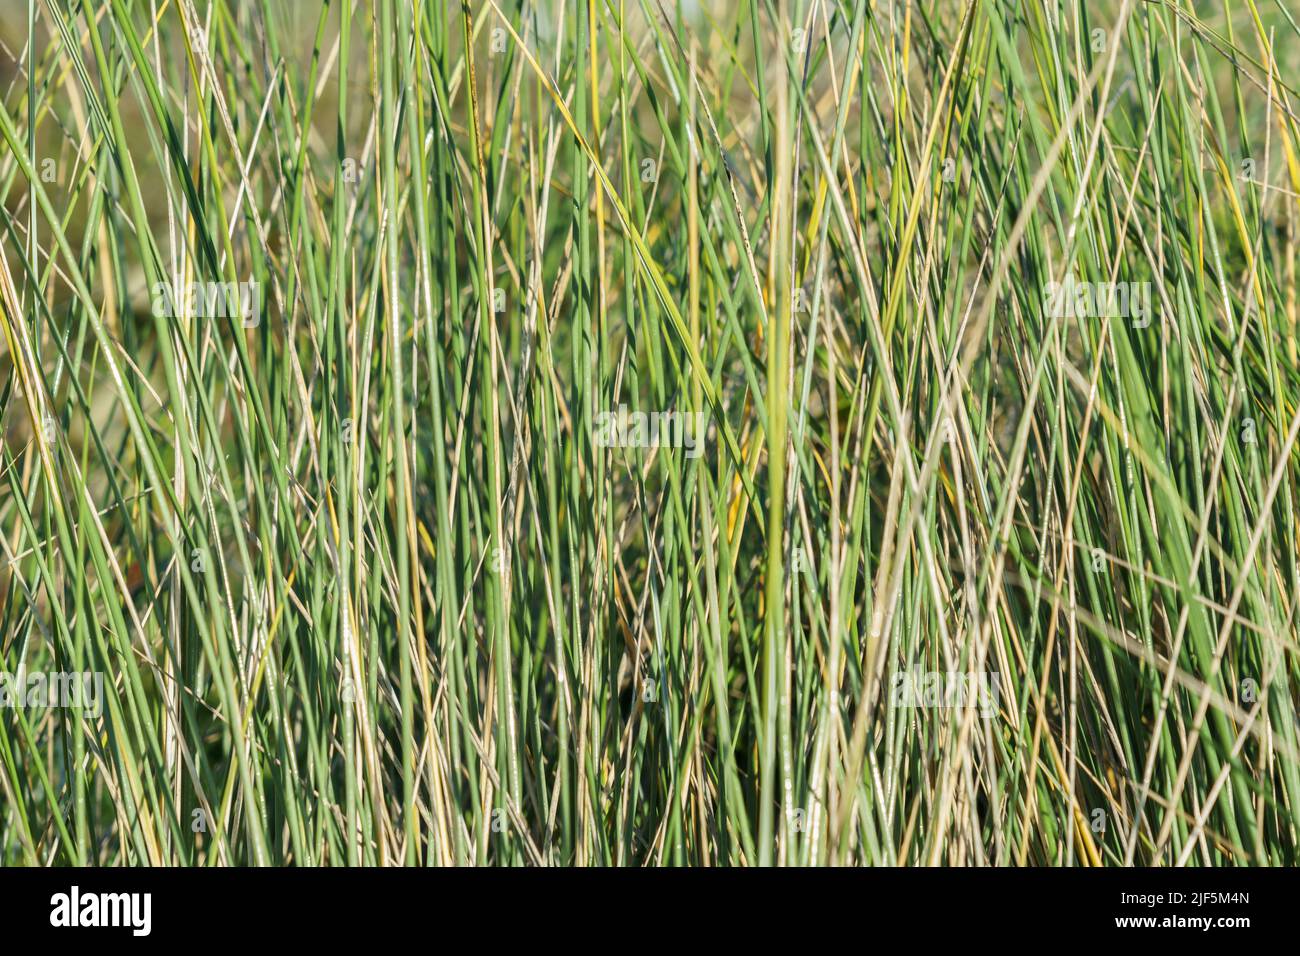 Wetland vegetation green reeds close-up. Stock Photo